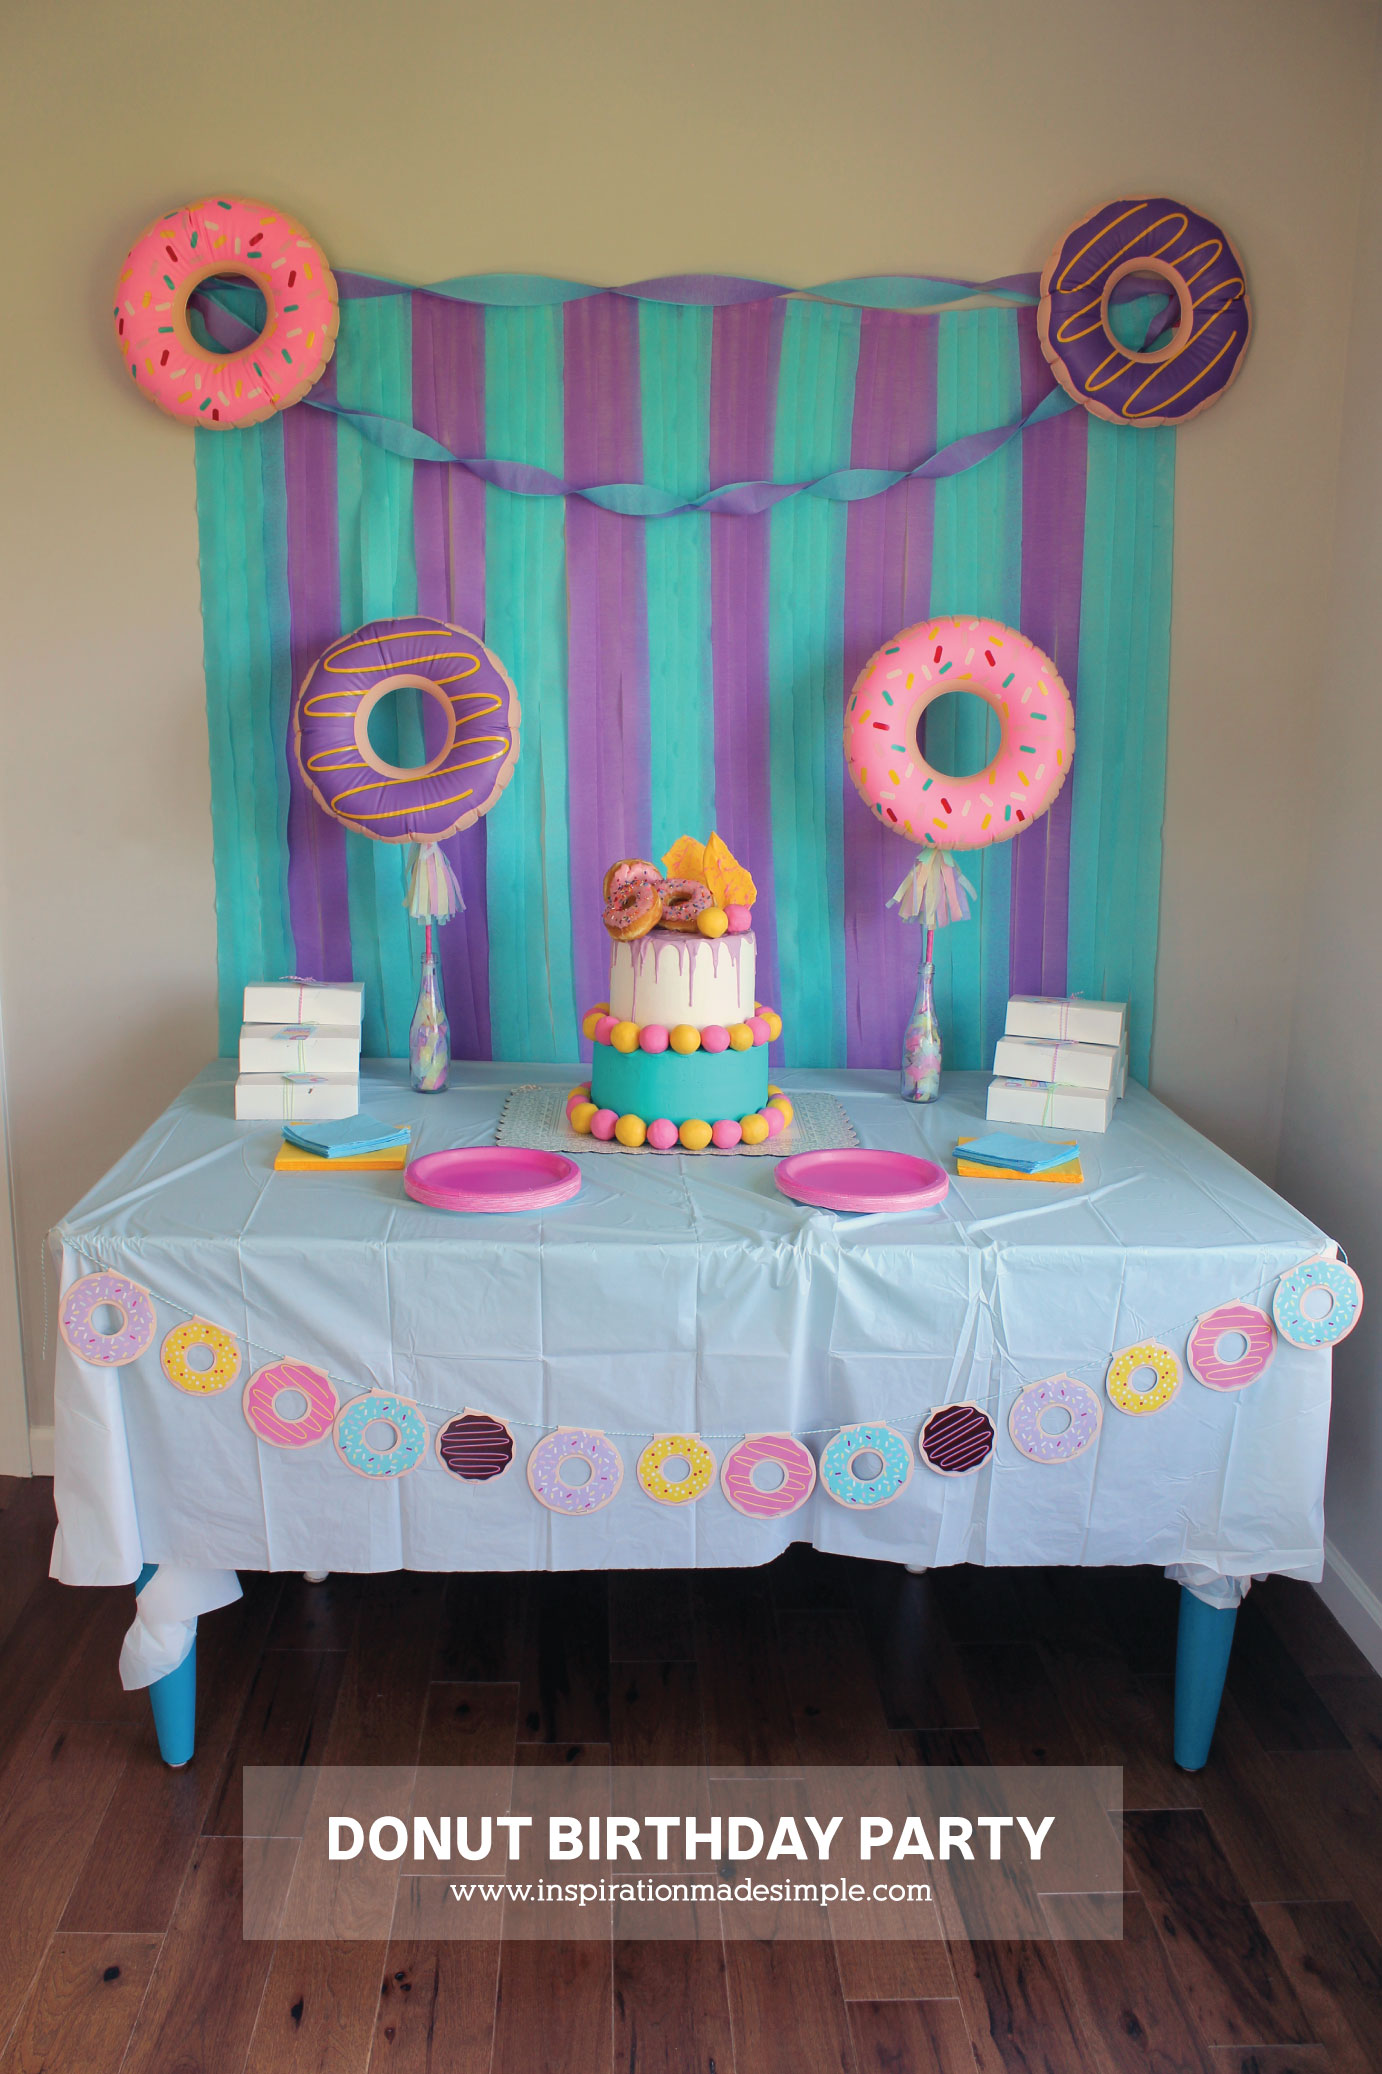 DIY Donut Birthday Party